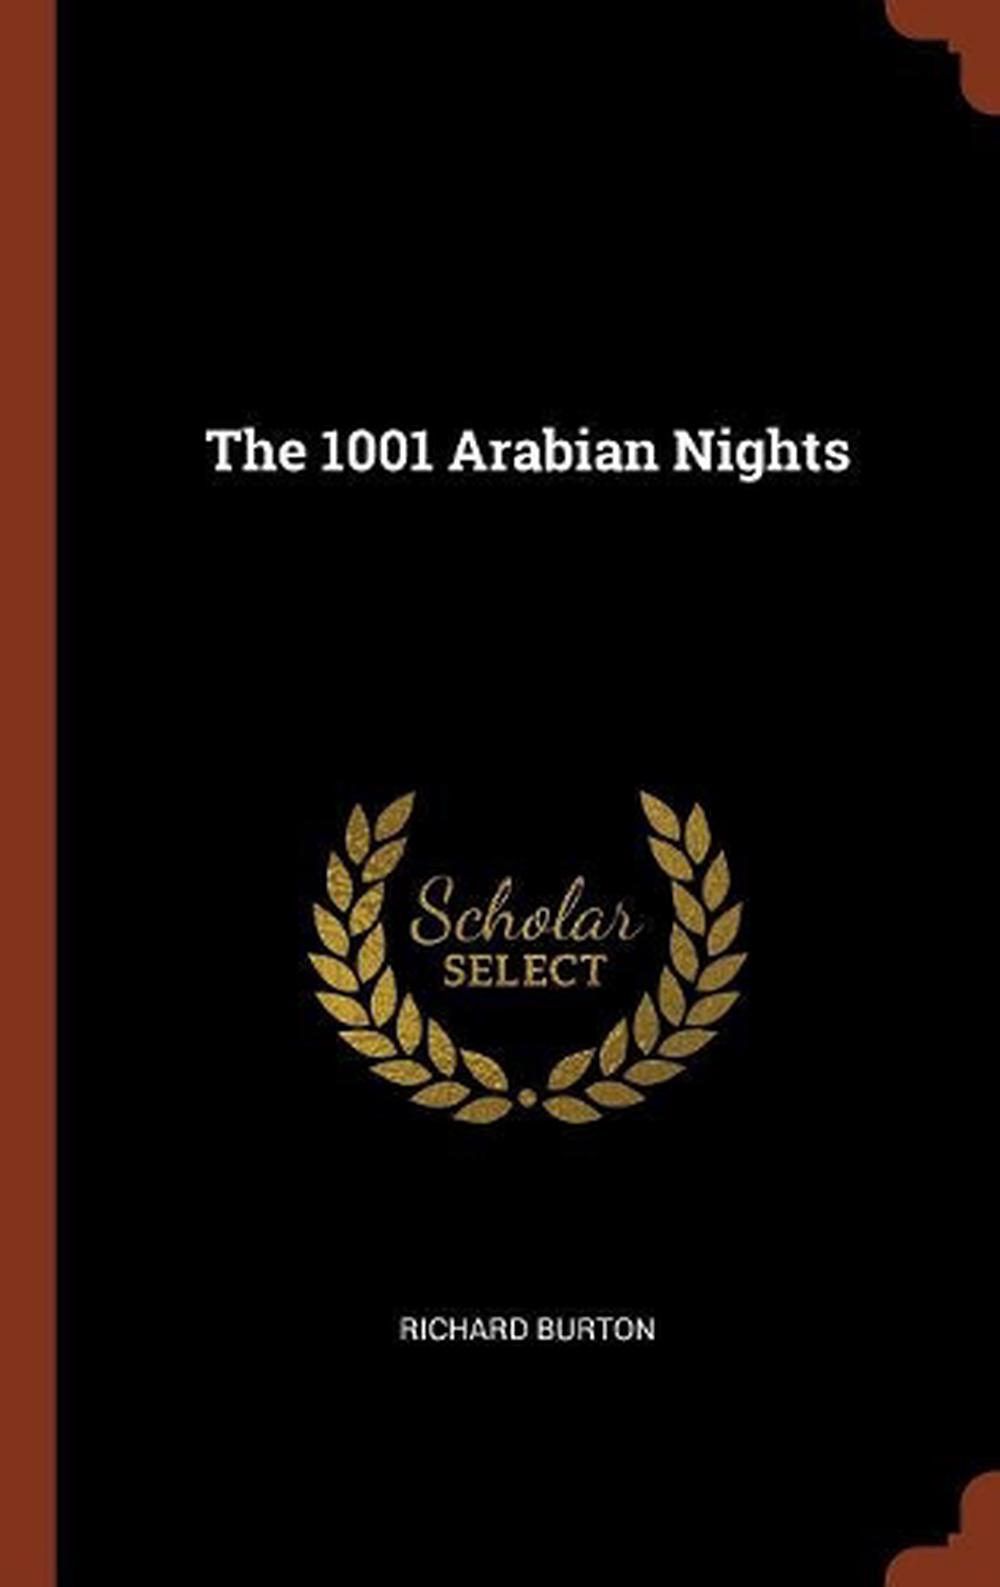 1001 arabian nights richard burton pdf download